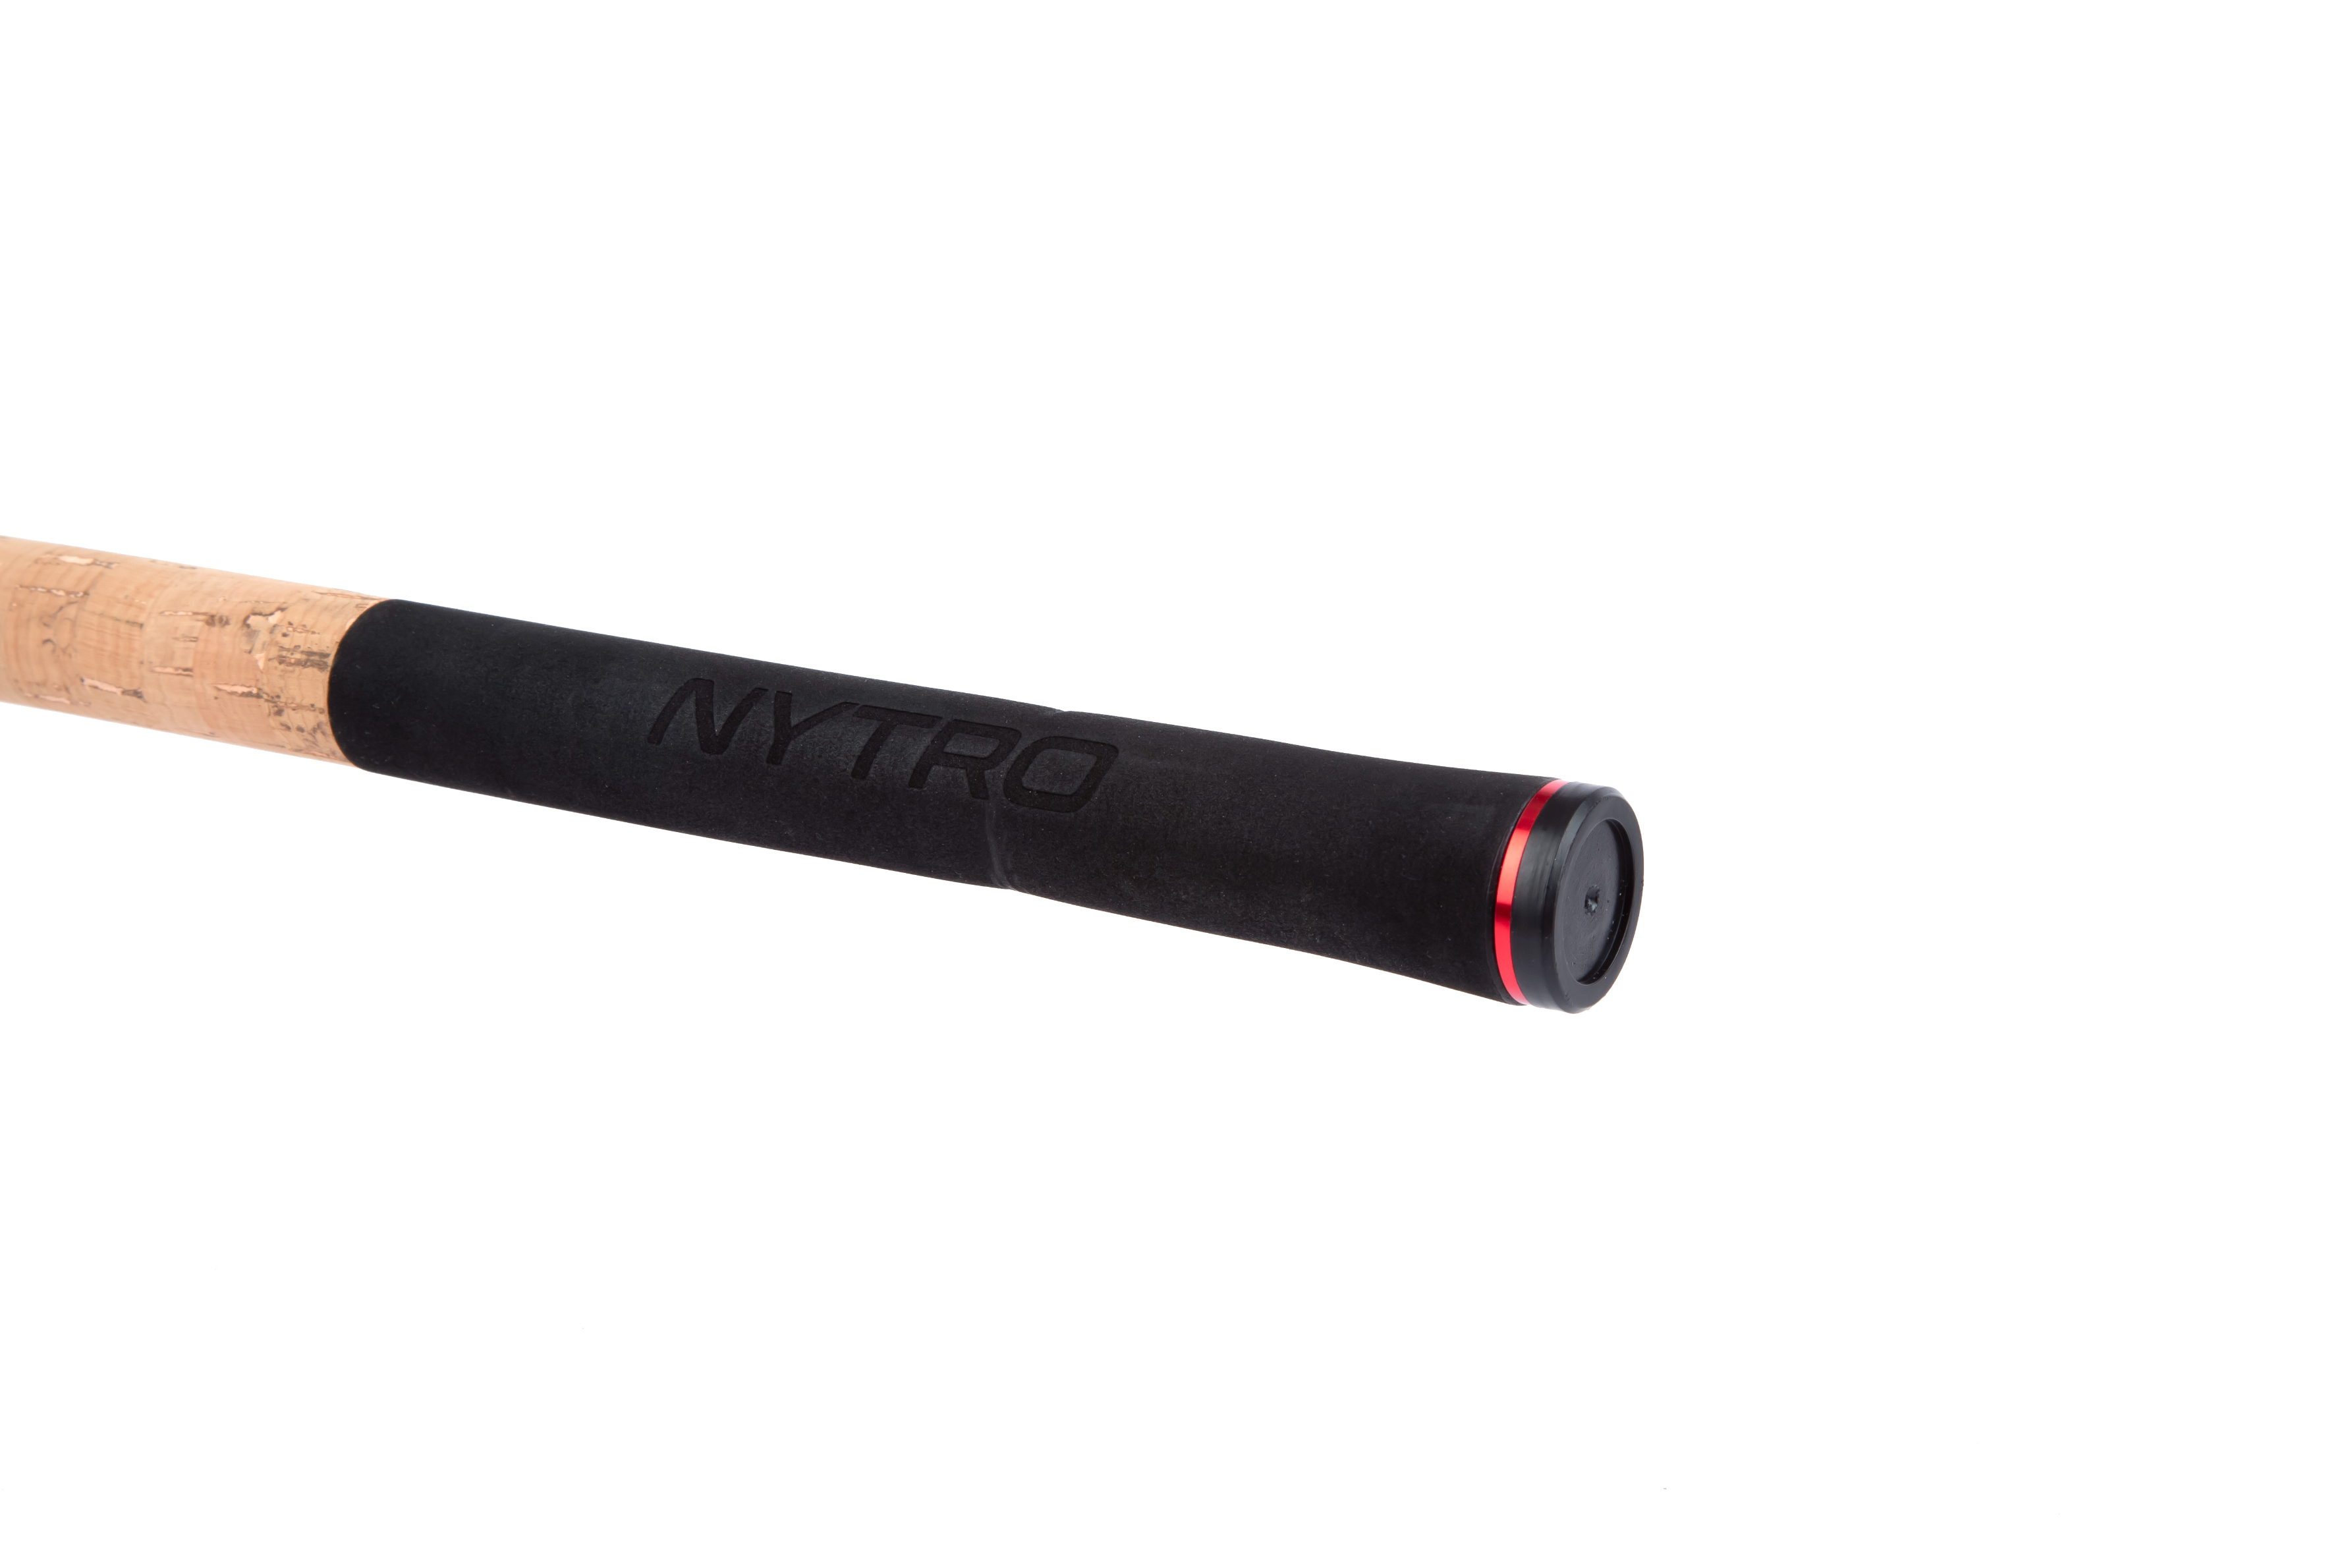 Nytro Impax Continental Power Feeder Rod